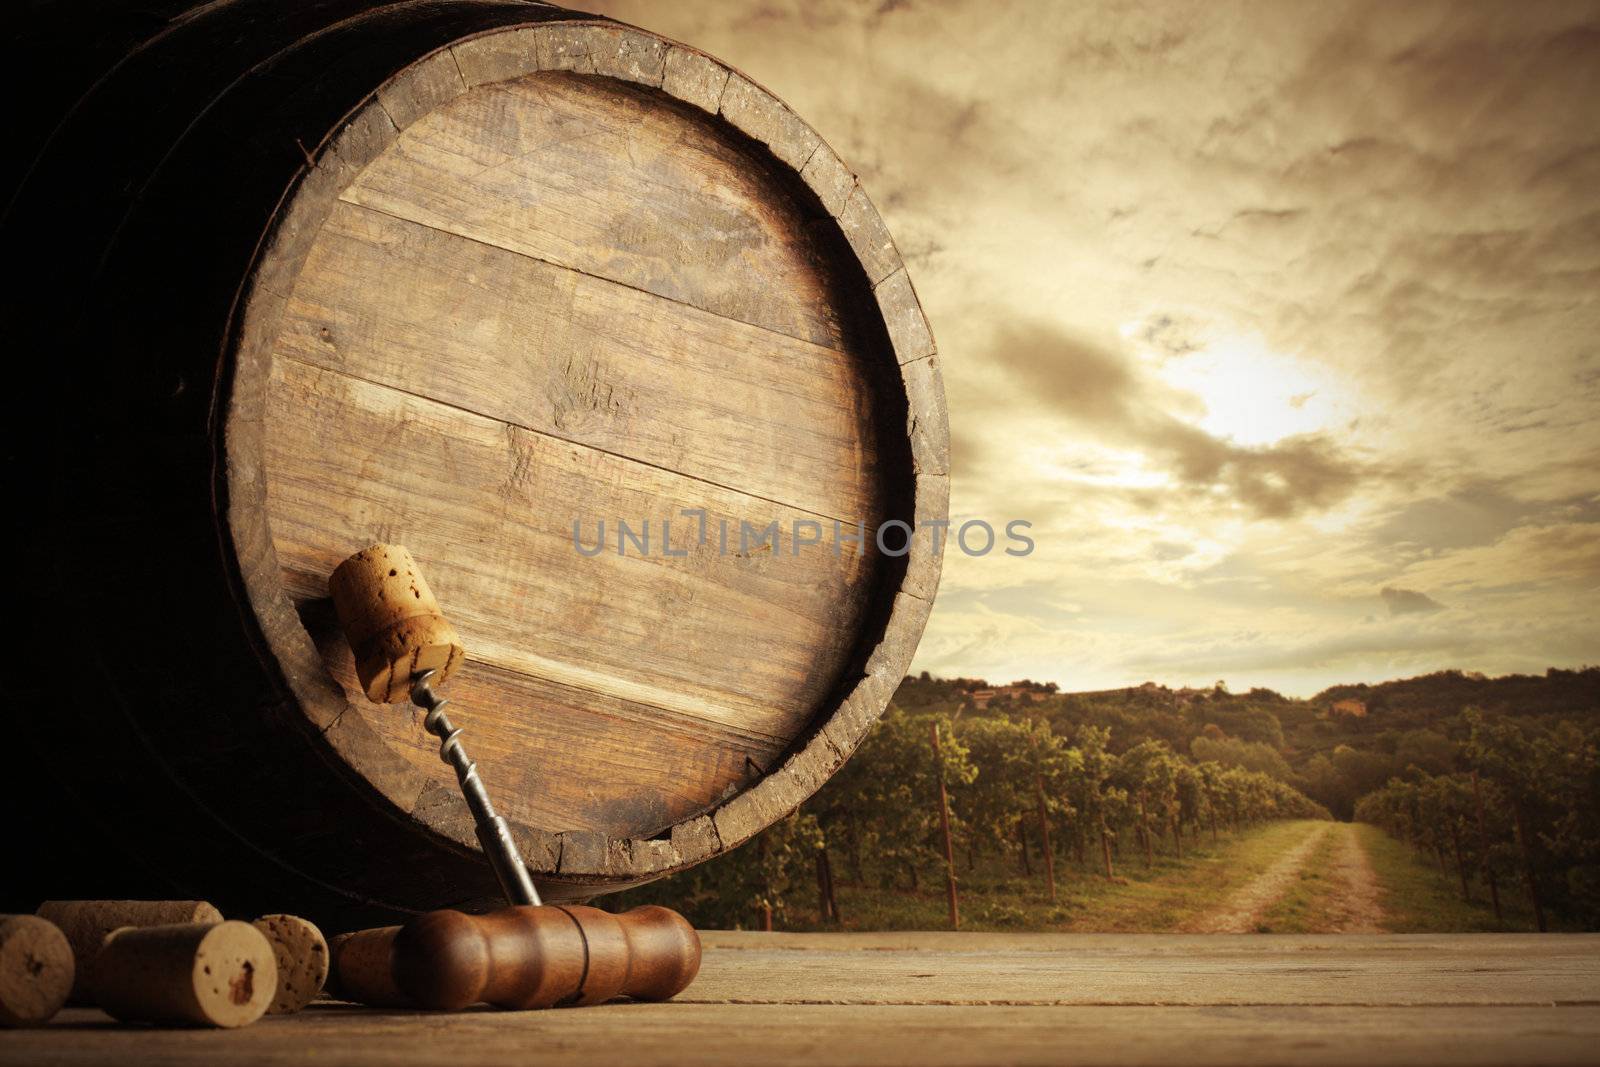 corkscrew and wooden barrel, vineyard on background